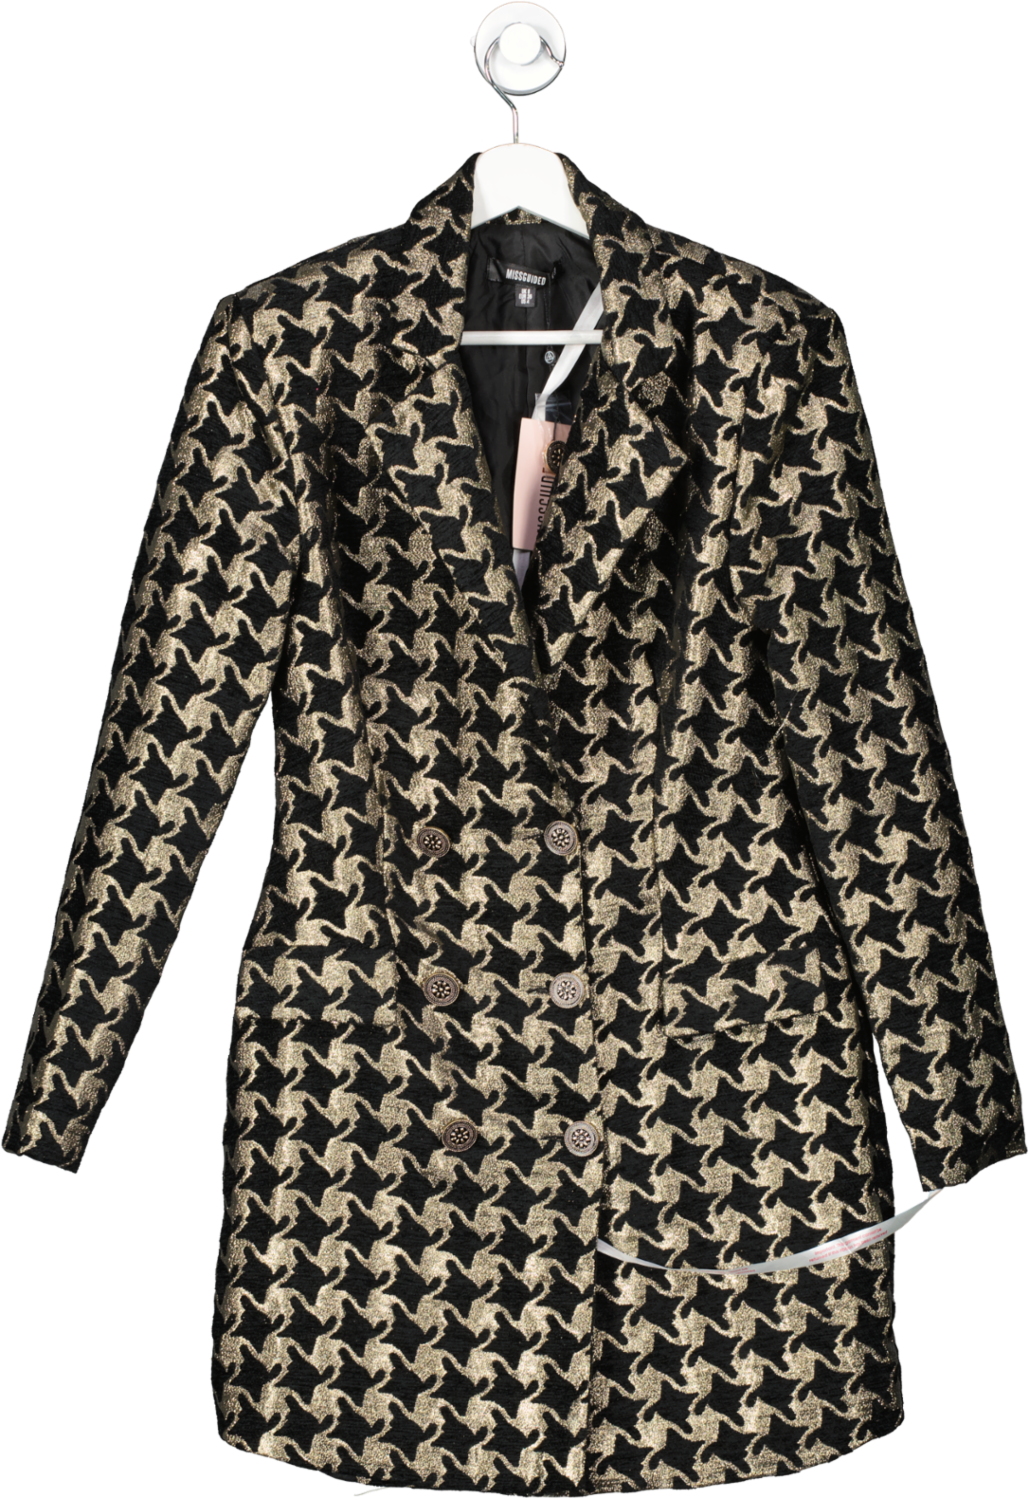 Missguided Black Dogtooth Jacquard Blazer Dress Gold Metallic UK 8